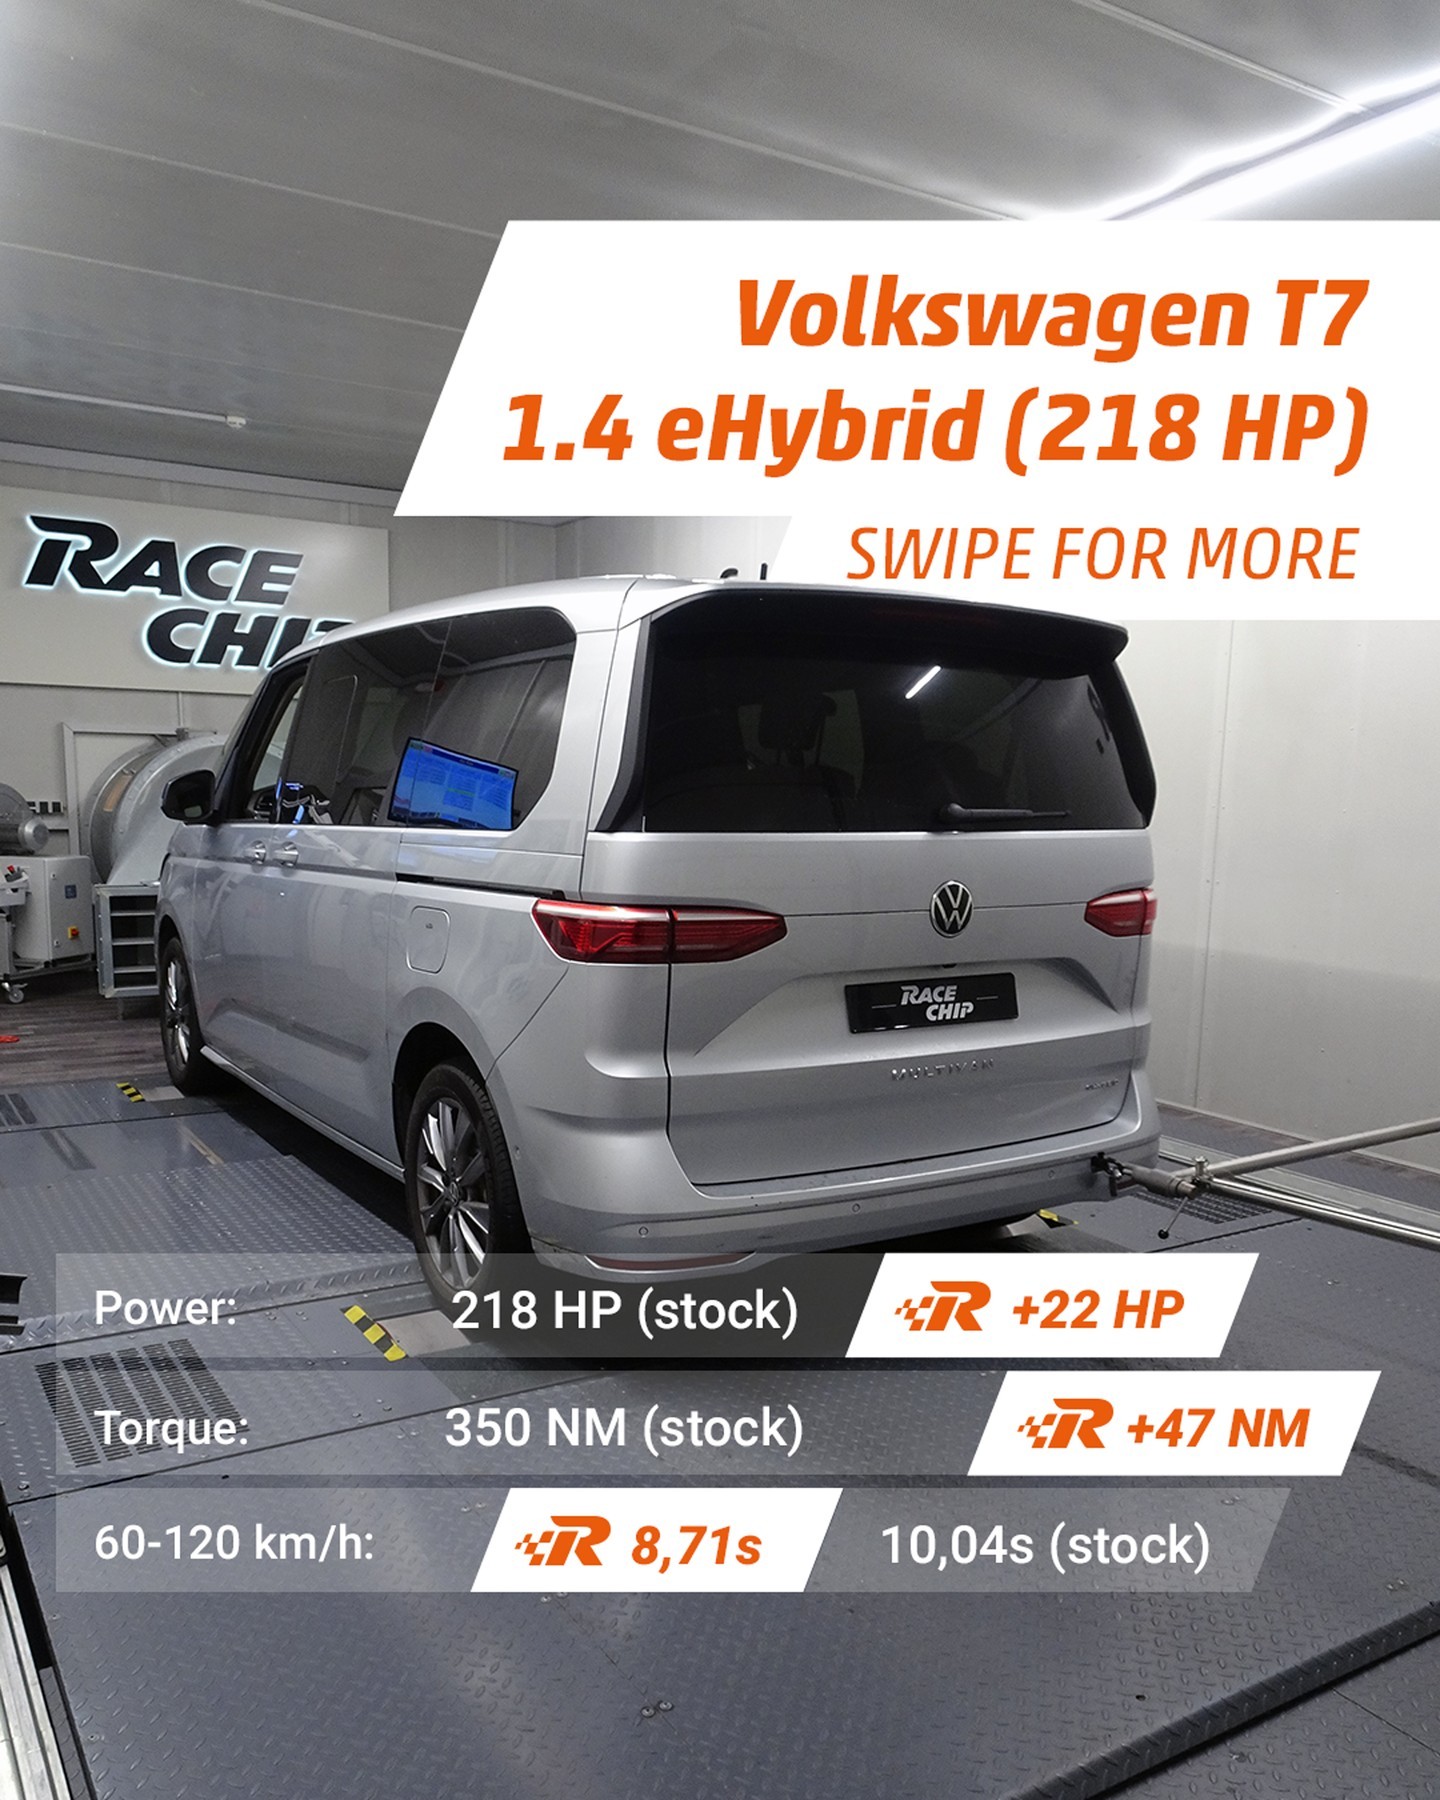 46% power with Stage 1 ECU Remap on Volkswagen Touran 1.6 TDI CR